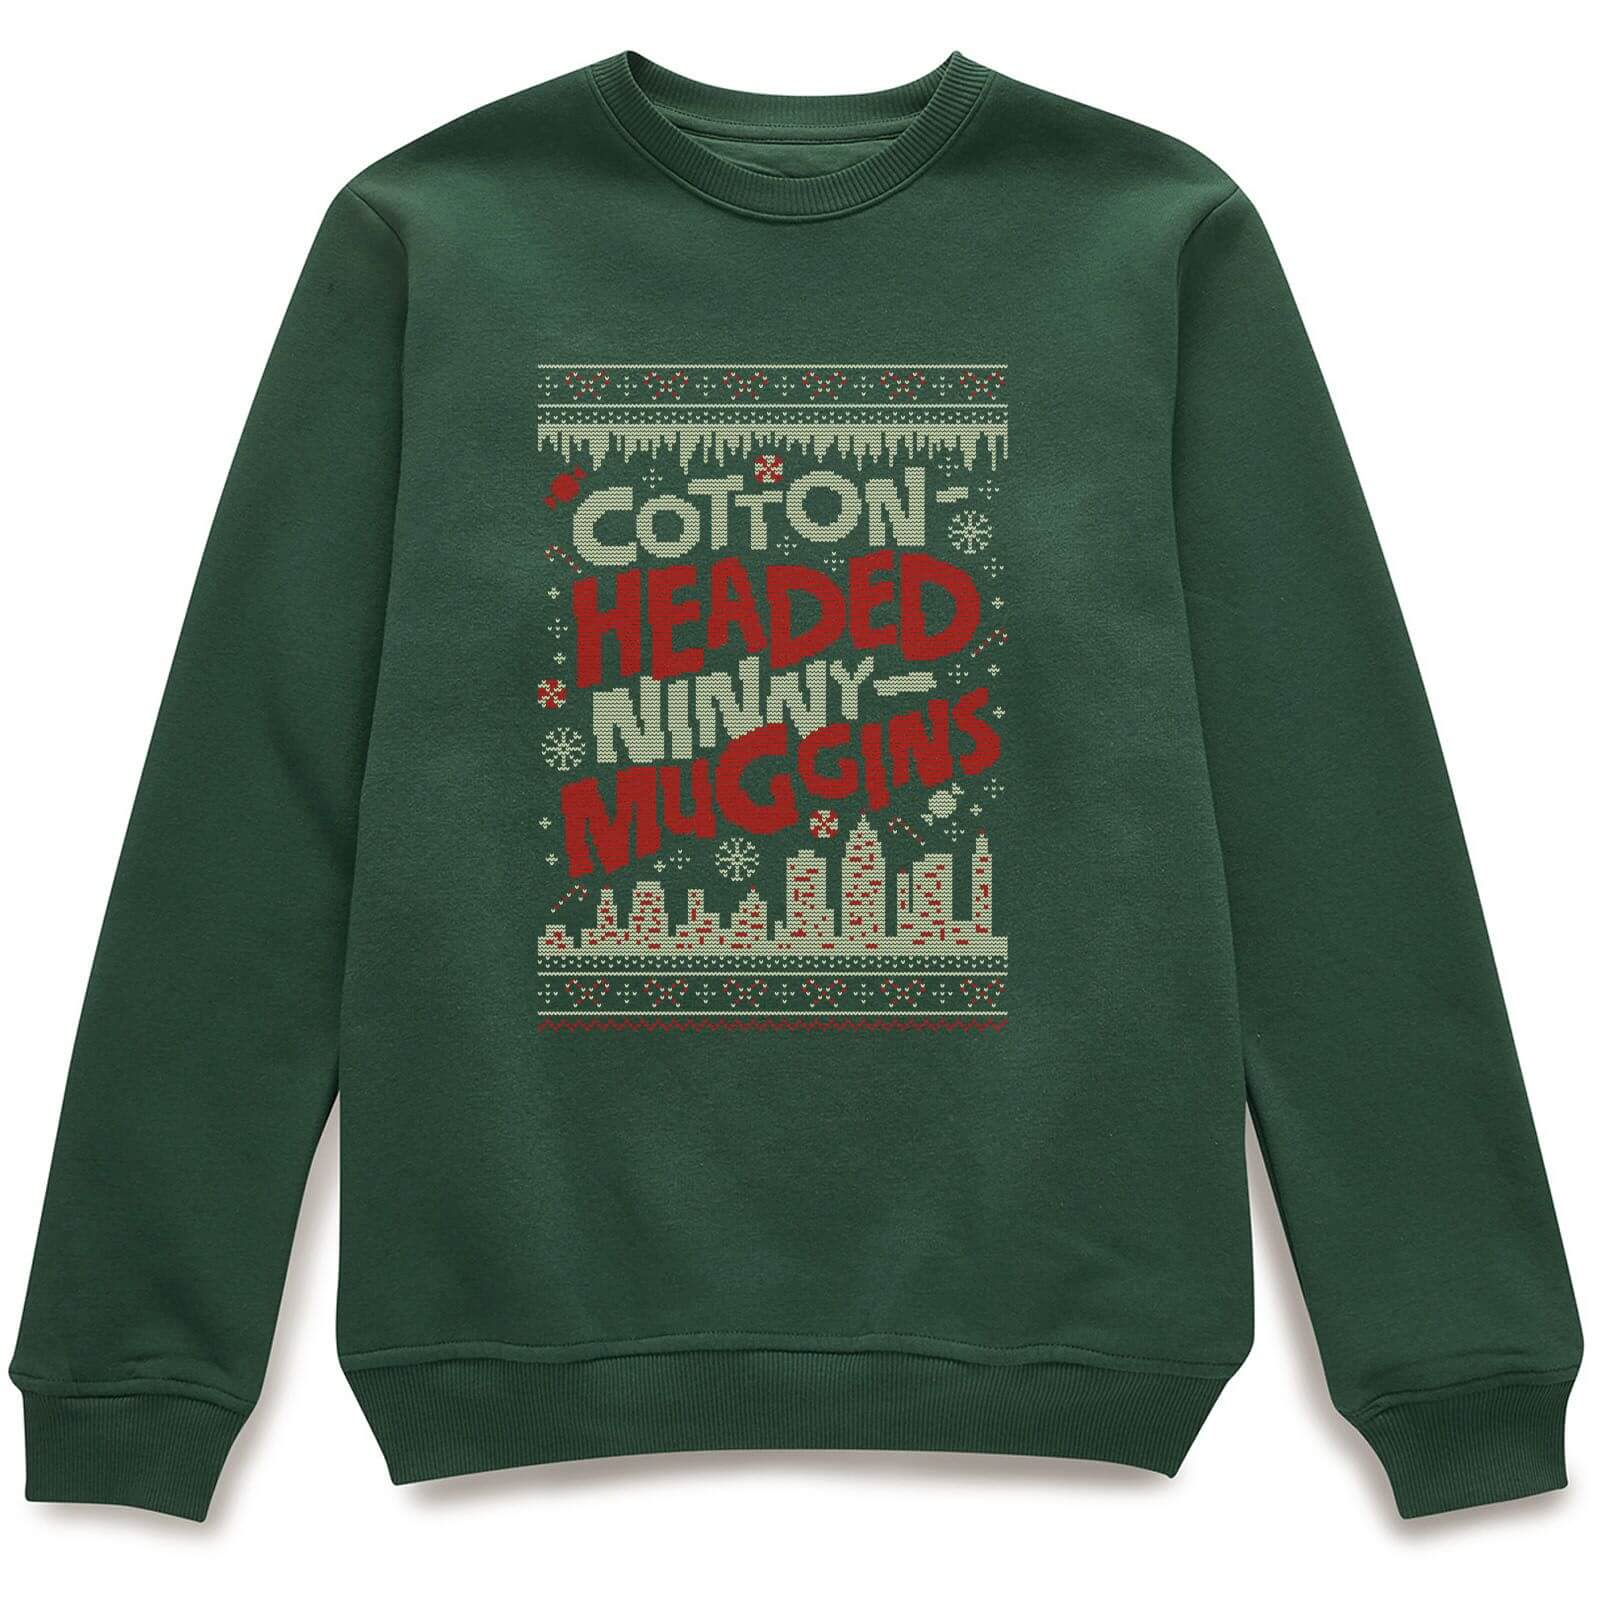 Elf Cotton-Headed-Ninny-Muggins Knit Christmas Sweatshirt - Forest Green - L